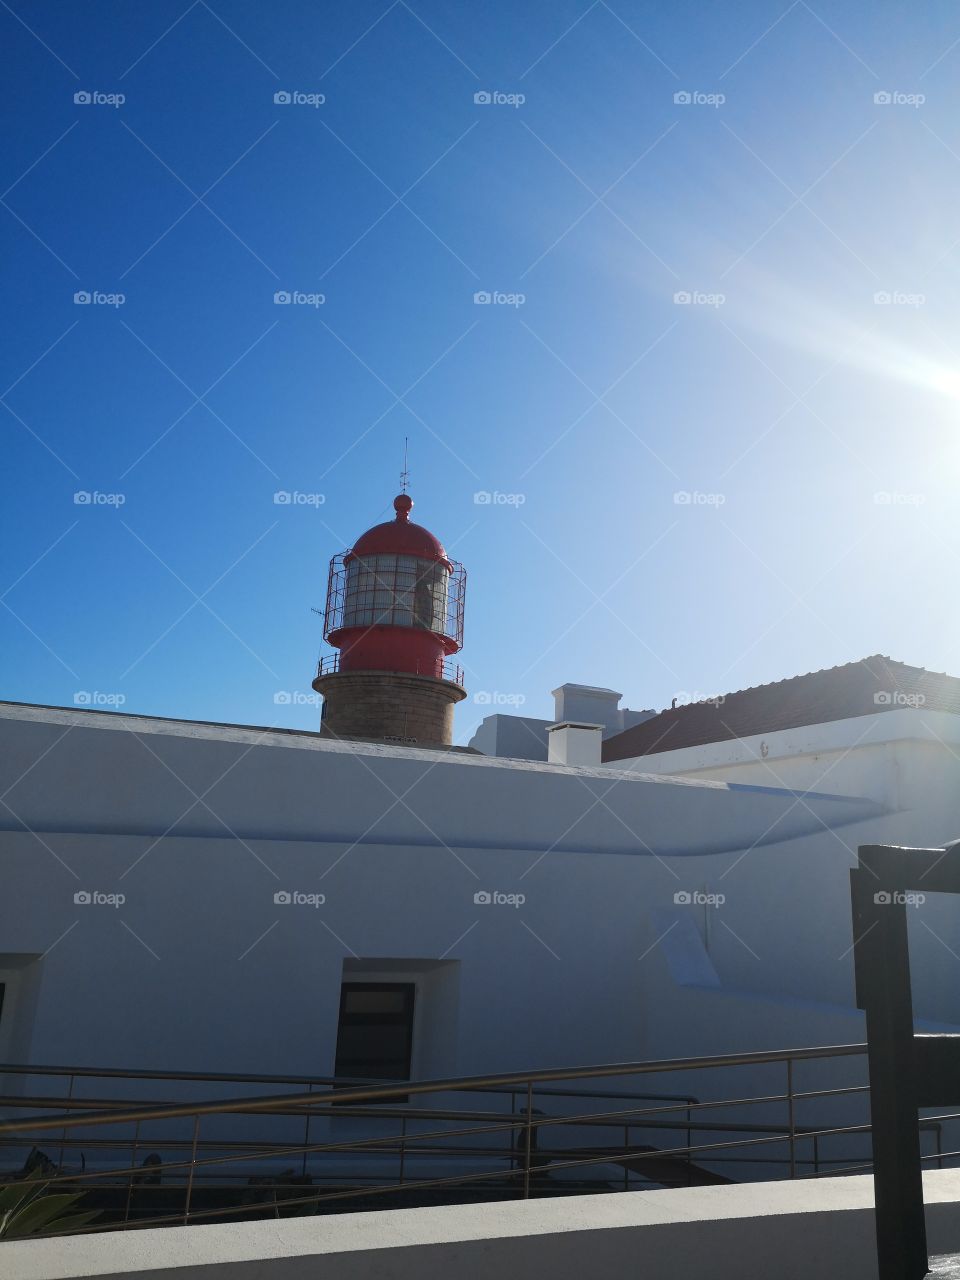 Lighthouse in Sagres, Portugal